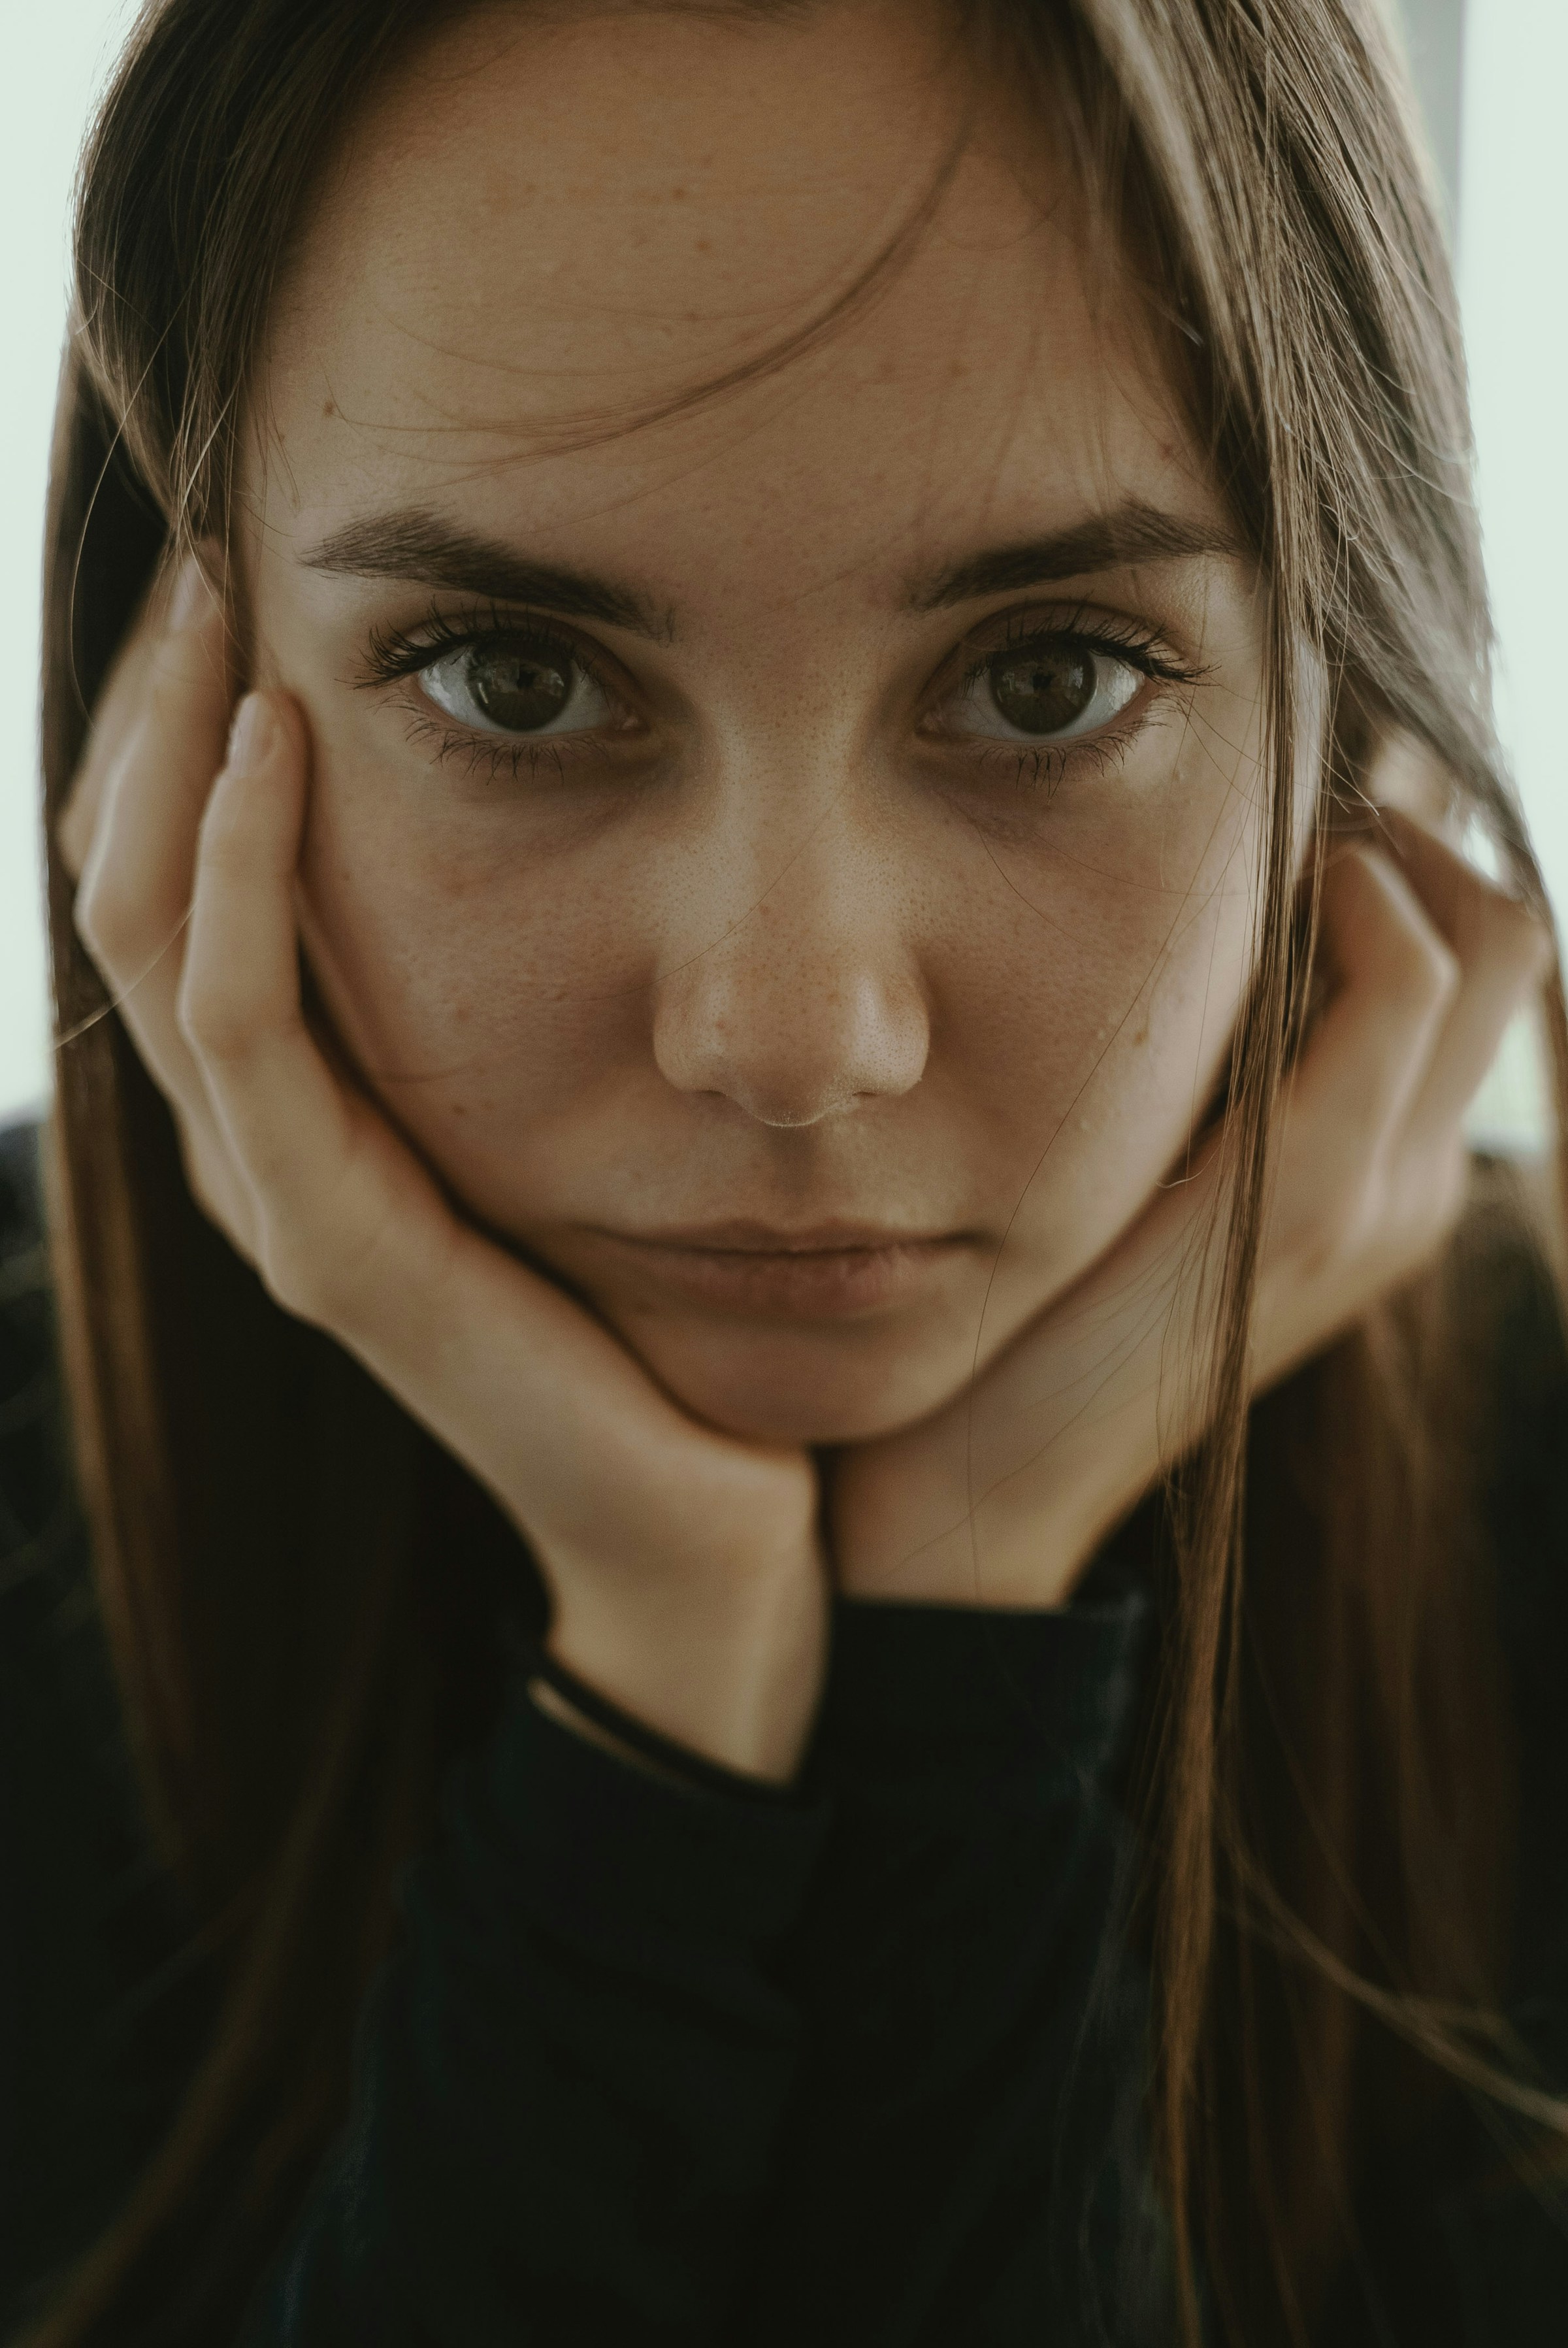 A close-up of a teenage girl | Source: Unsplash